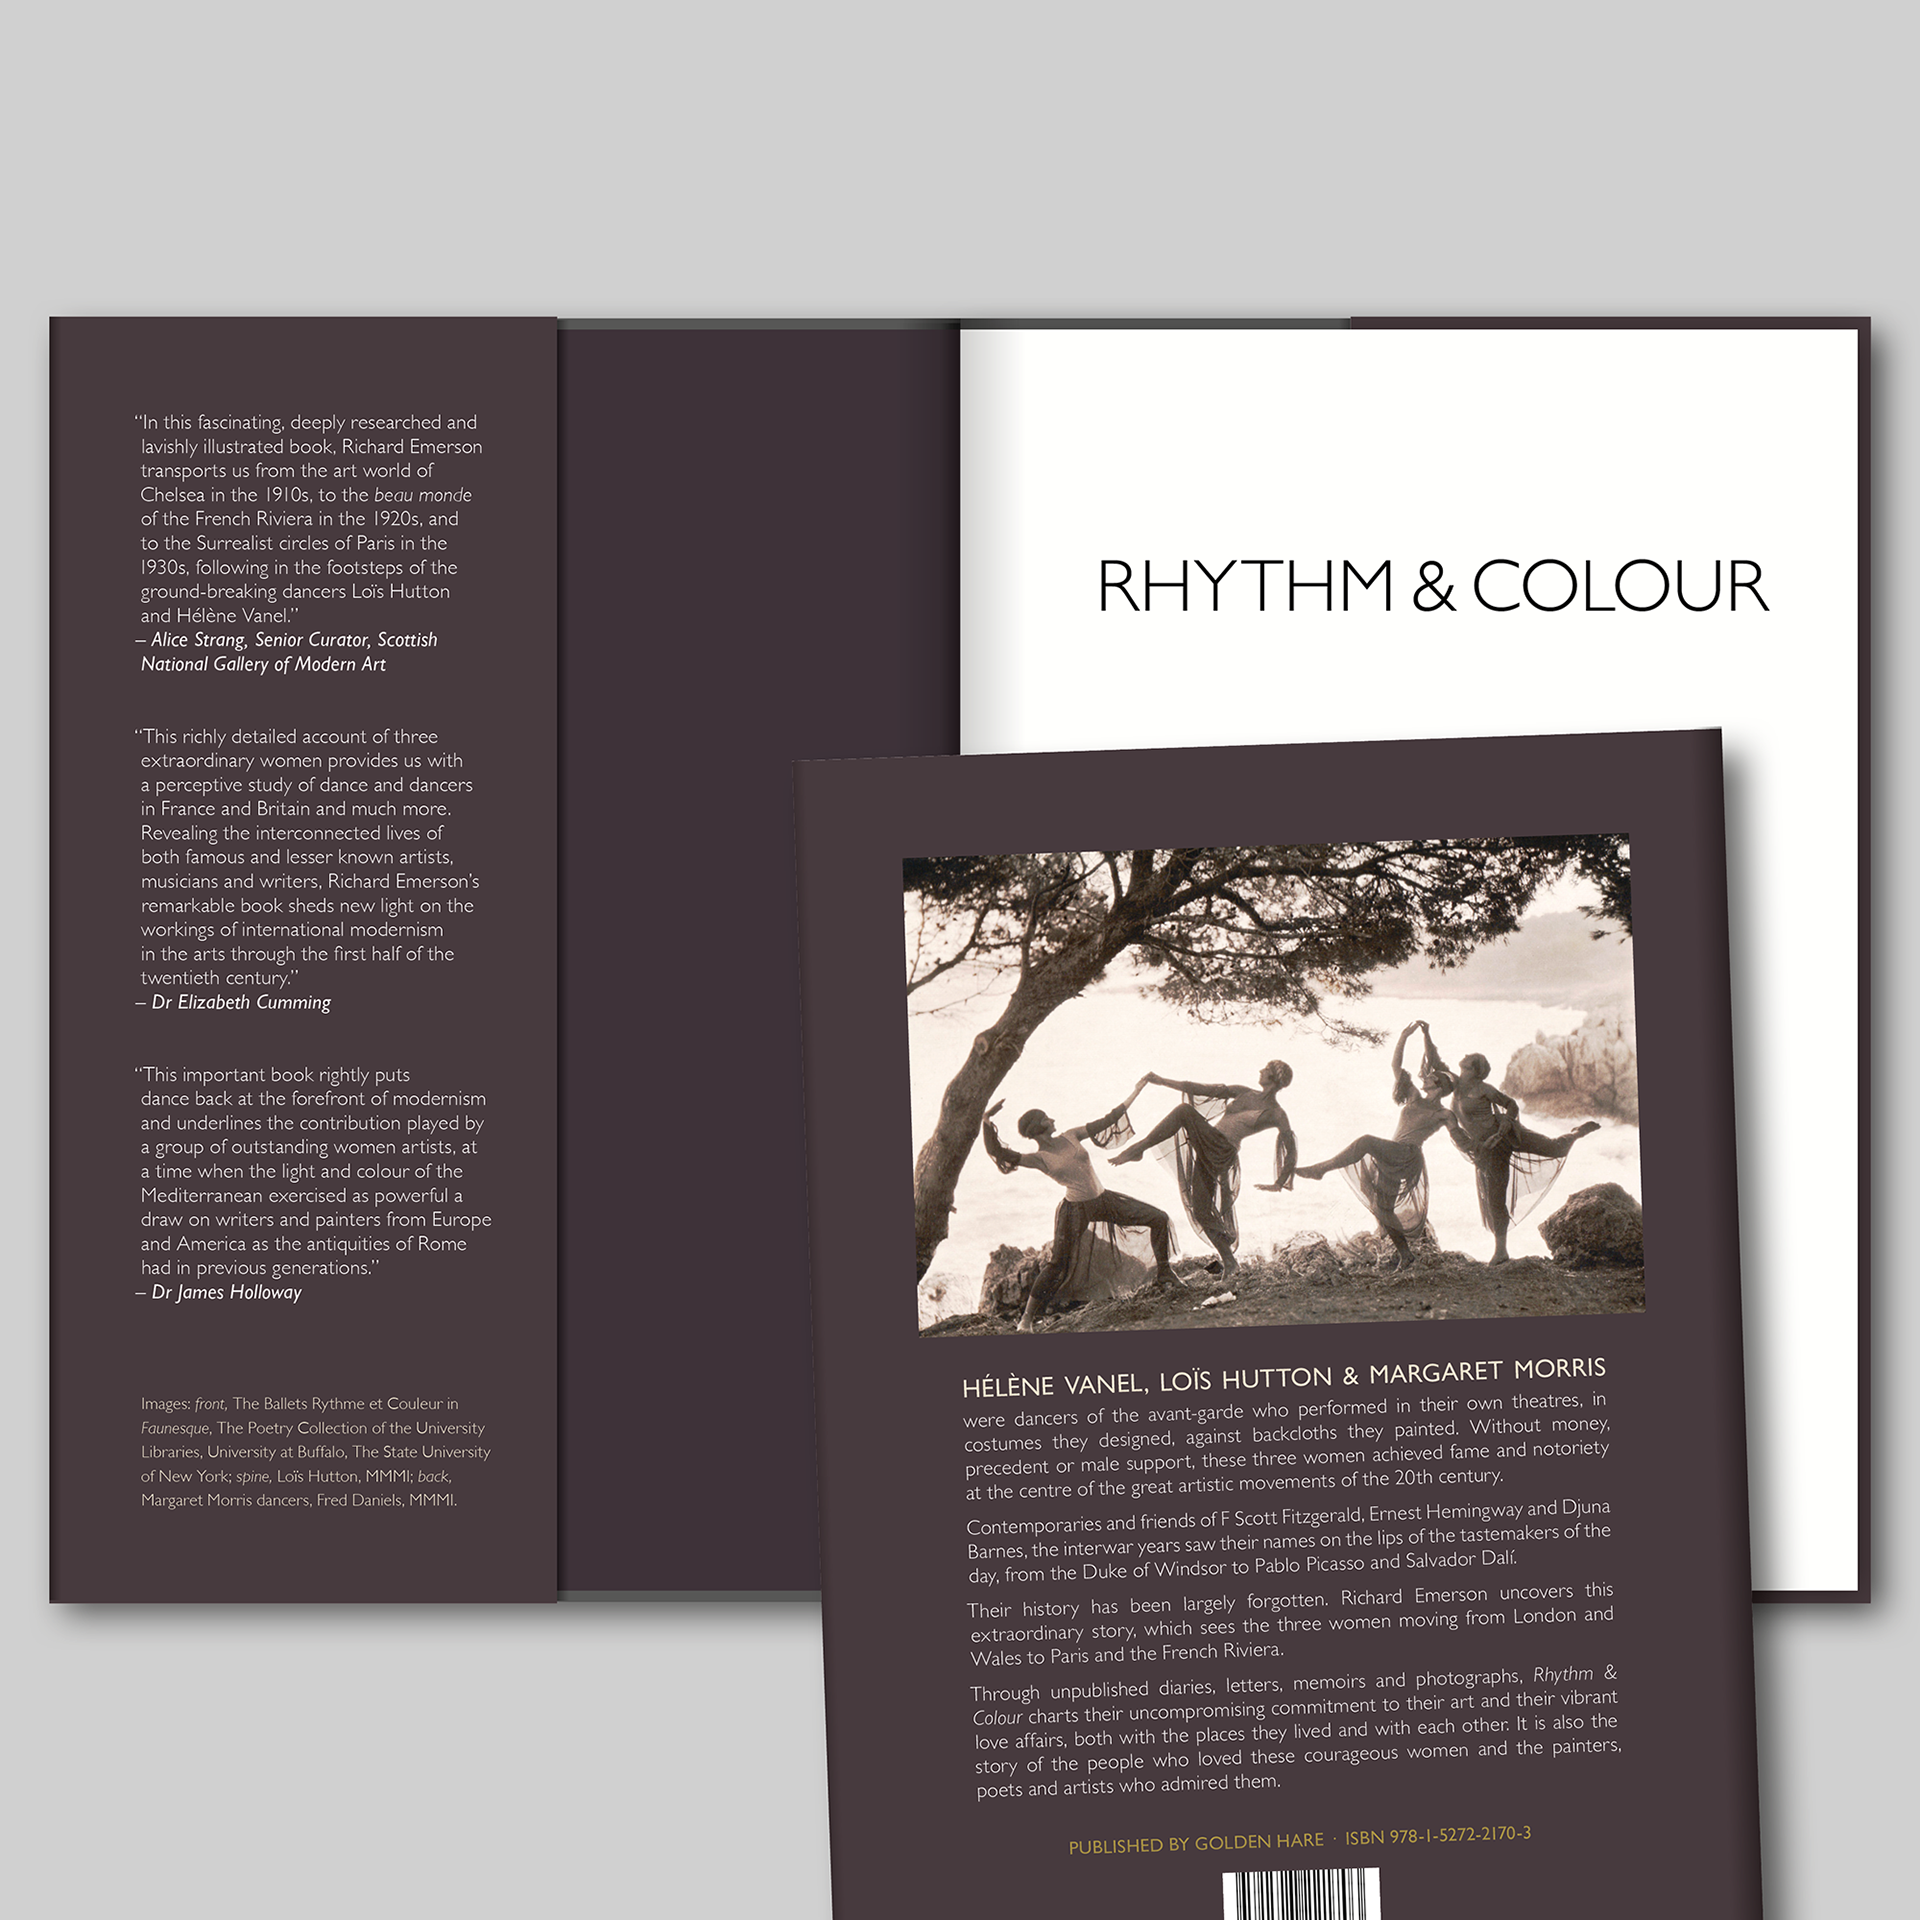 James Brook / Design - Rhythm & Colour Book